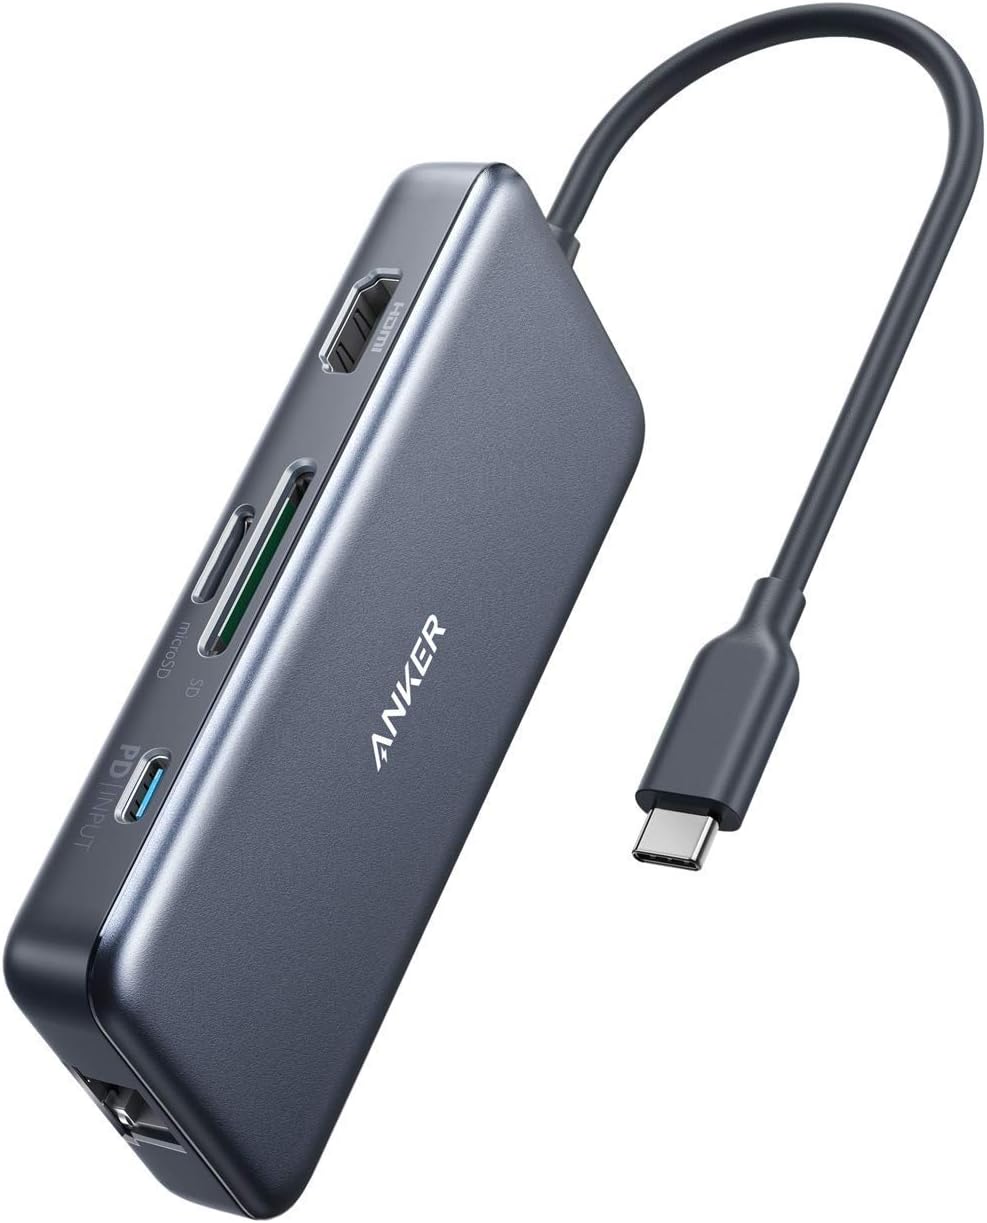 هاب 7 پورت انکر تایپ C مدل Anker USB C Hub Adapter - ارسال 10 الی 15 روز کاری